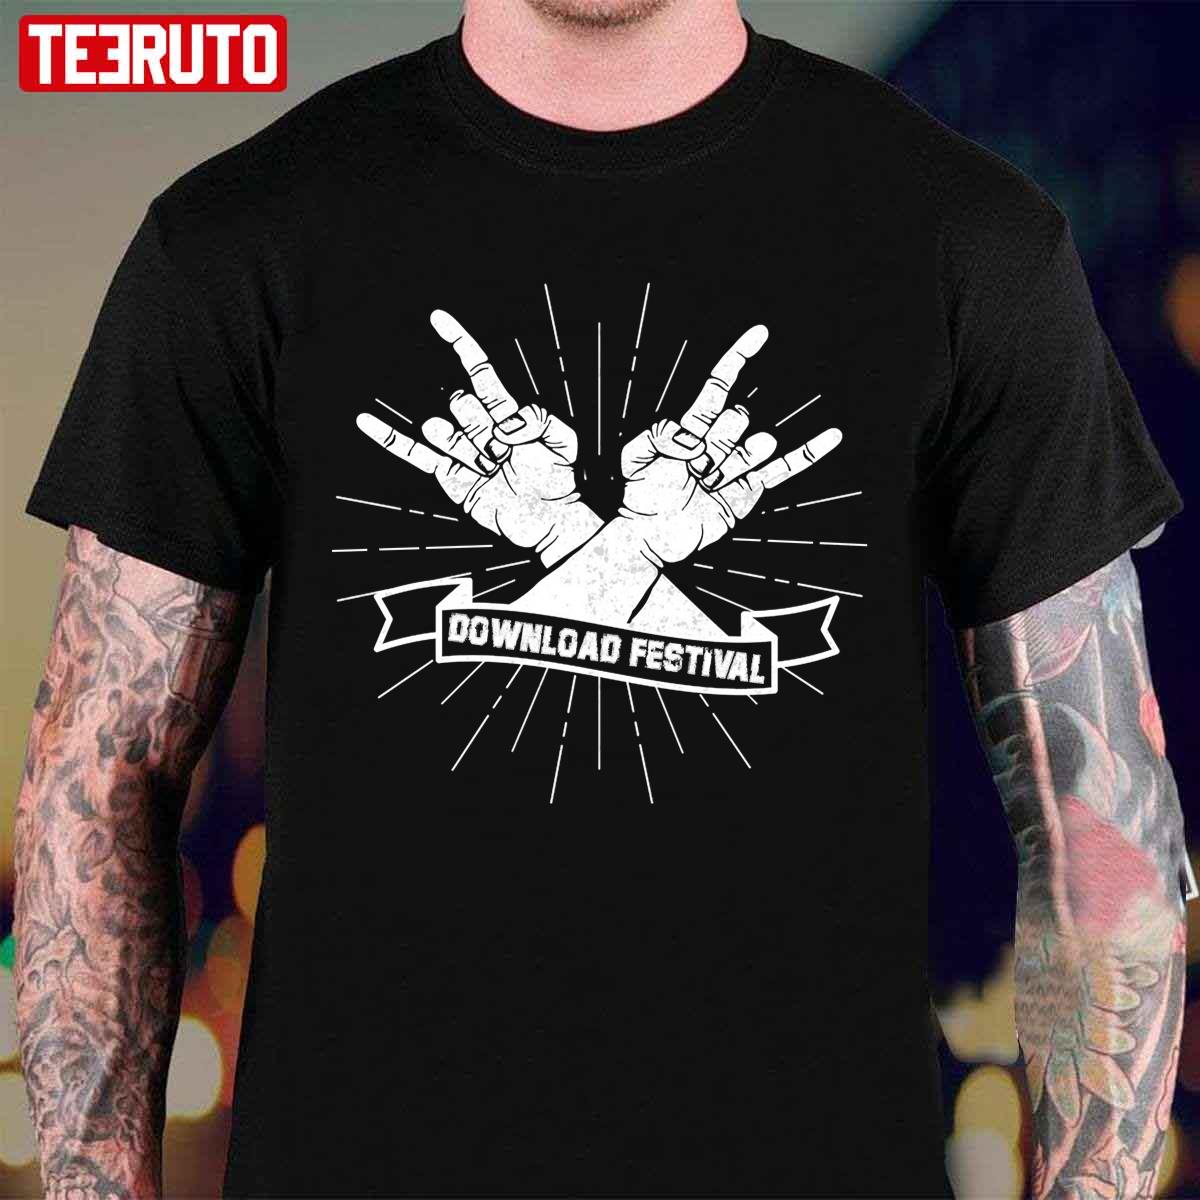 Download Festival Rock Hands Unisex T-Shirt